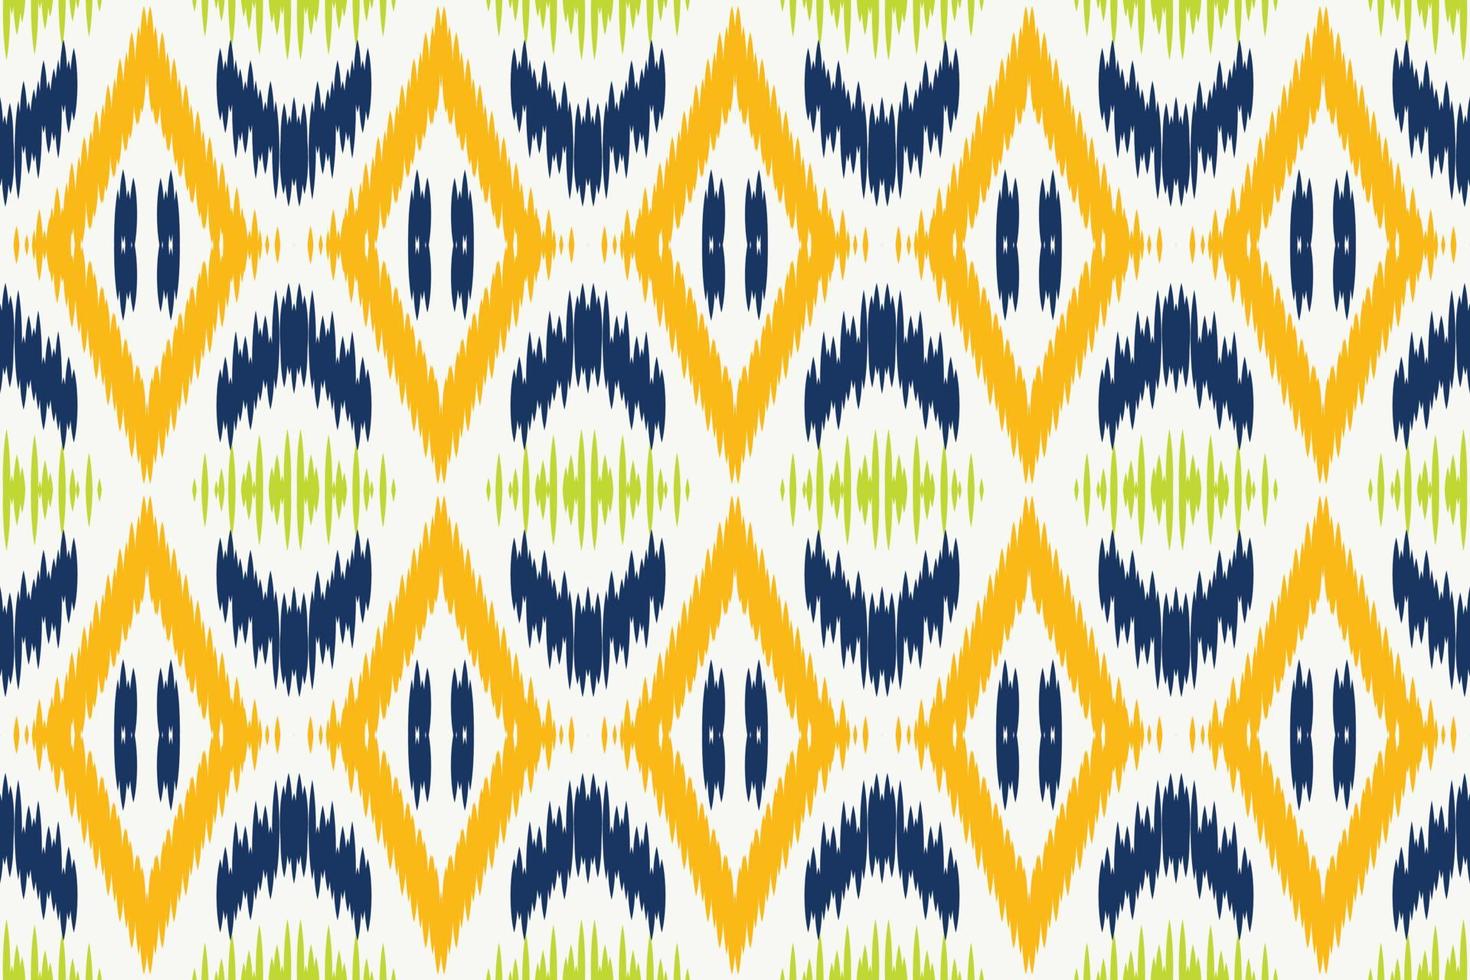 patrón ikat tribal áfrica patrón sin costuras. étnico geométrico ikkat batik vector digital diseño textil para estampados tela sari mughal cepillo símbolo franjas textura kurti kurtis kurtas